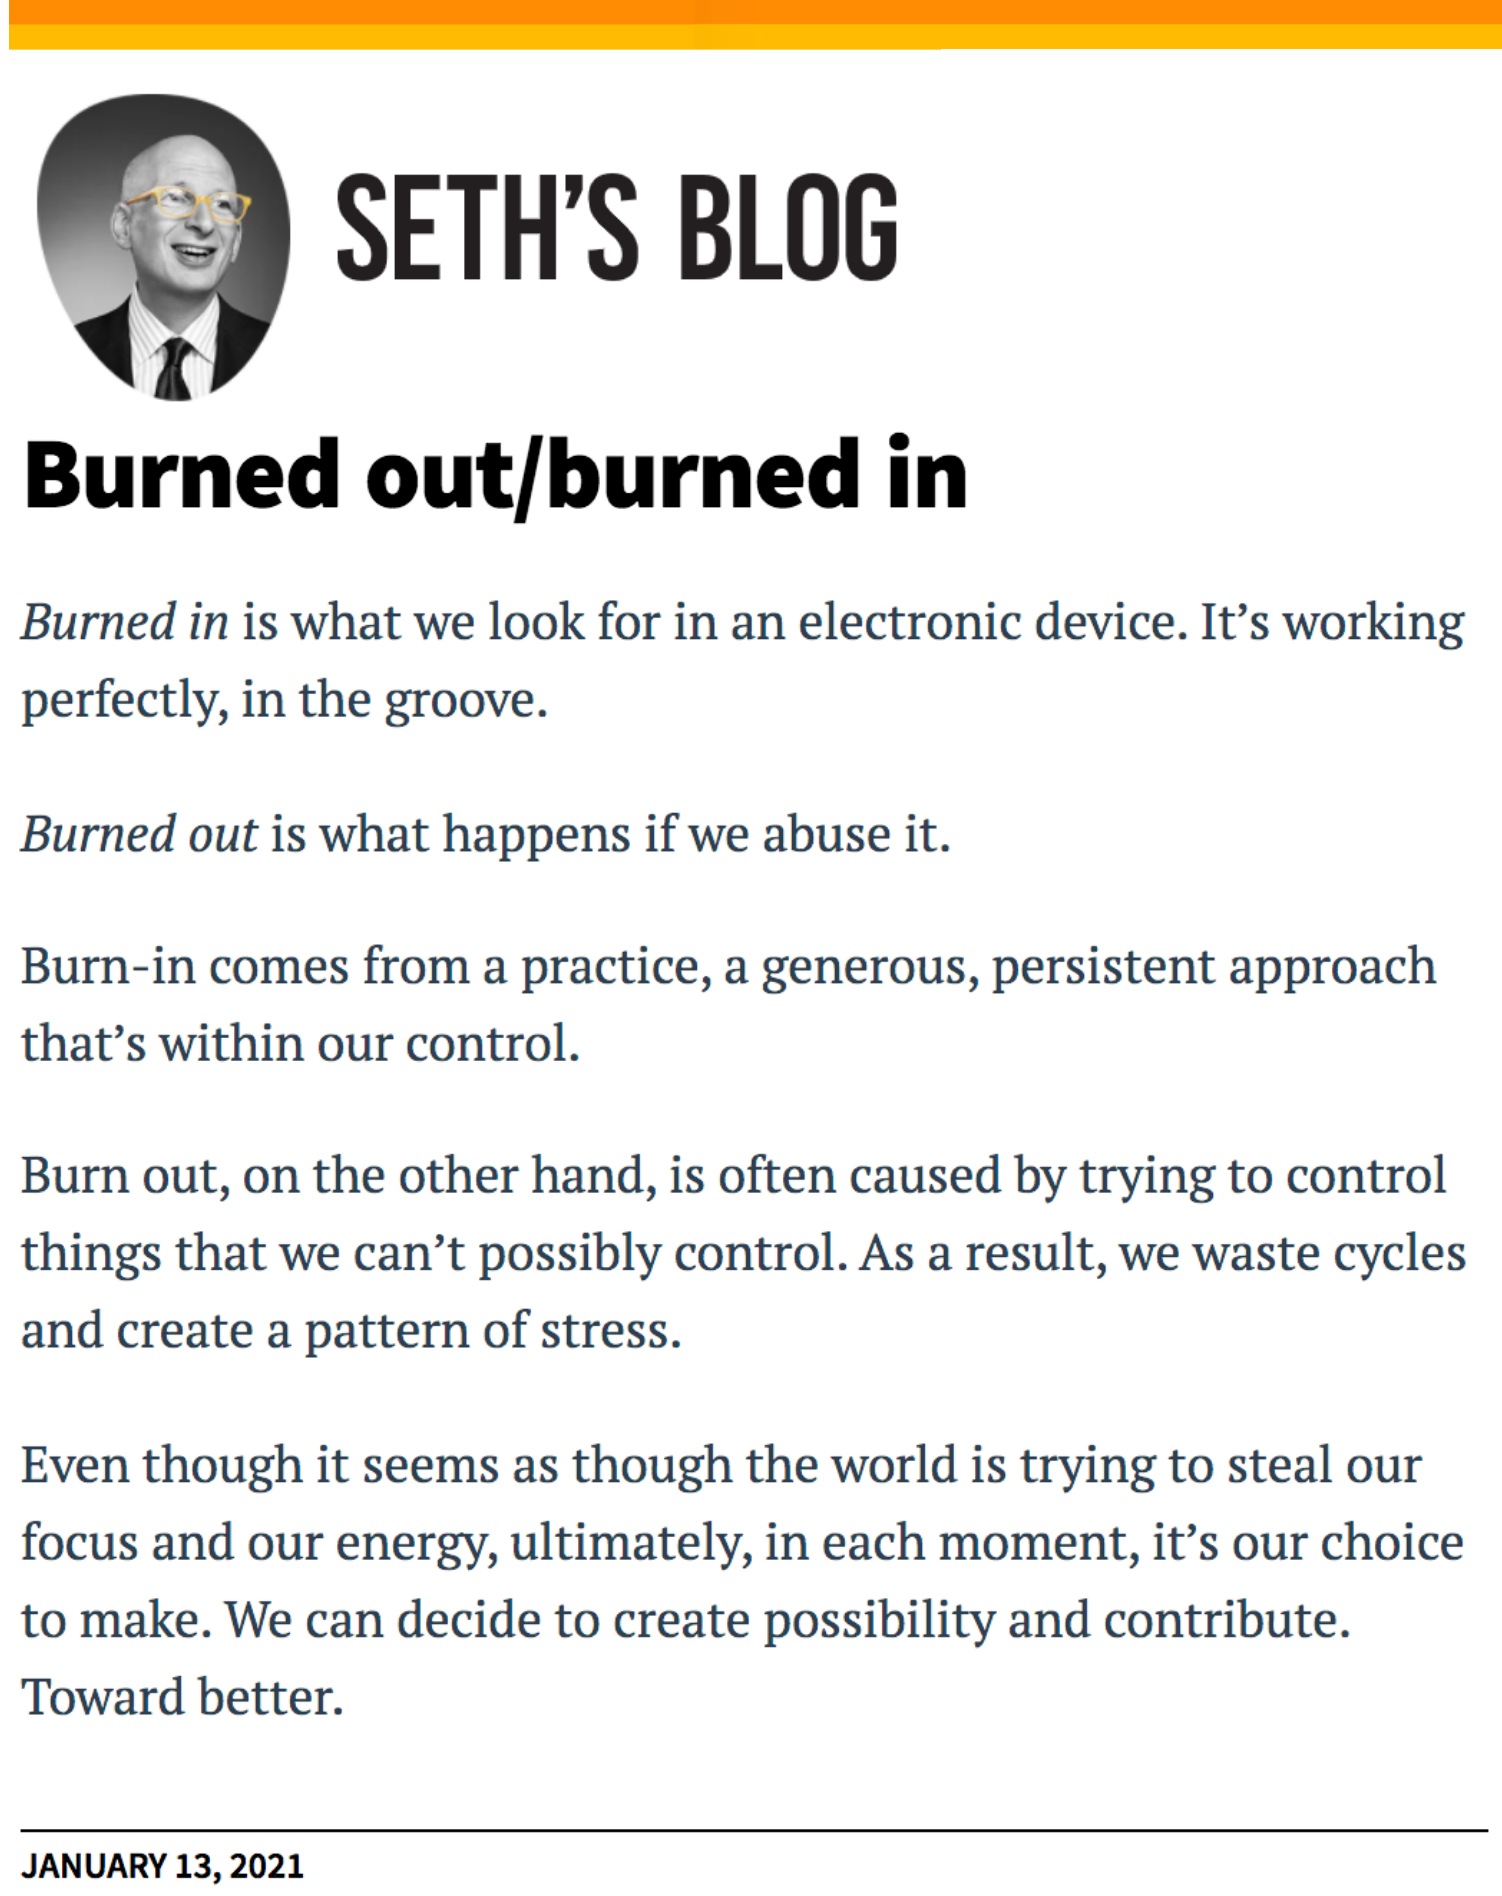 Blogpost from Seth Godin